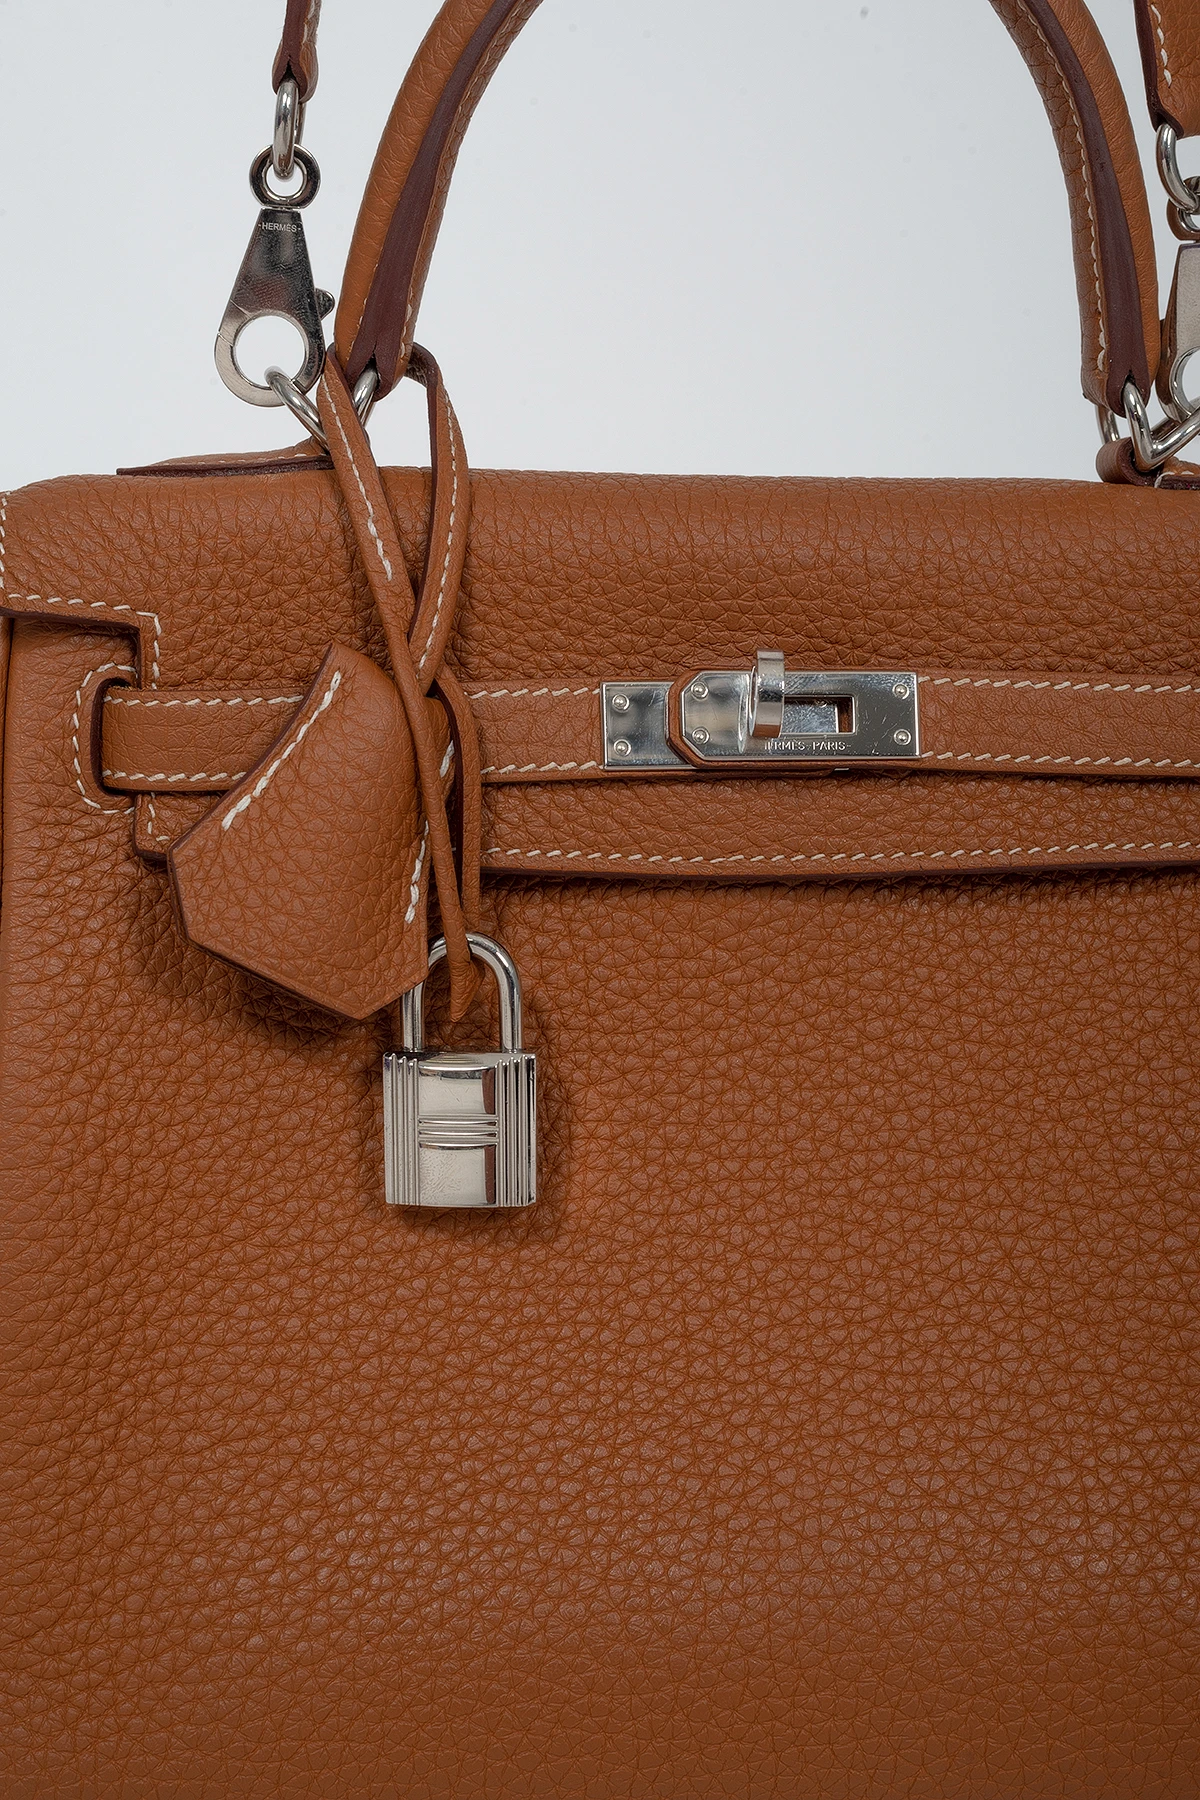 Hermes Birkin bag in caramel color